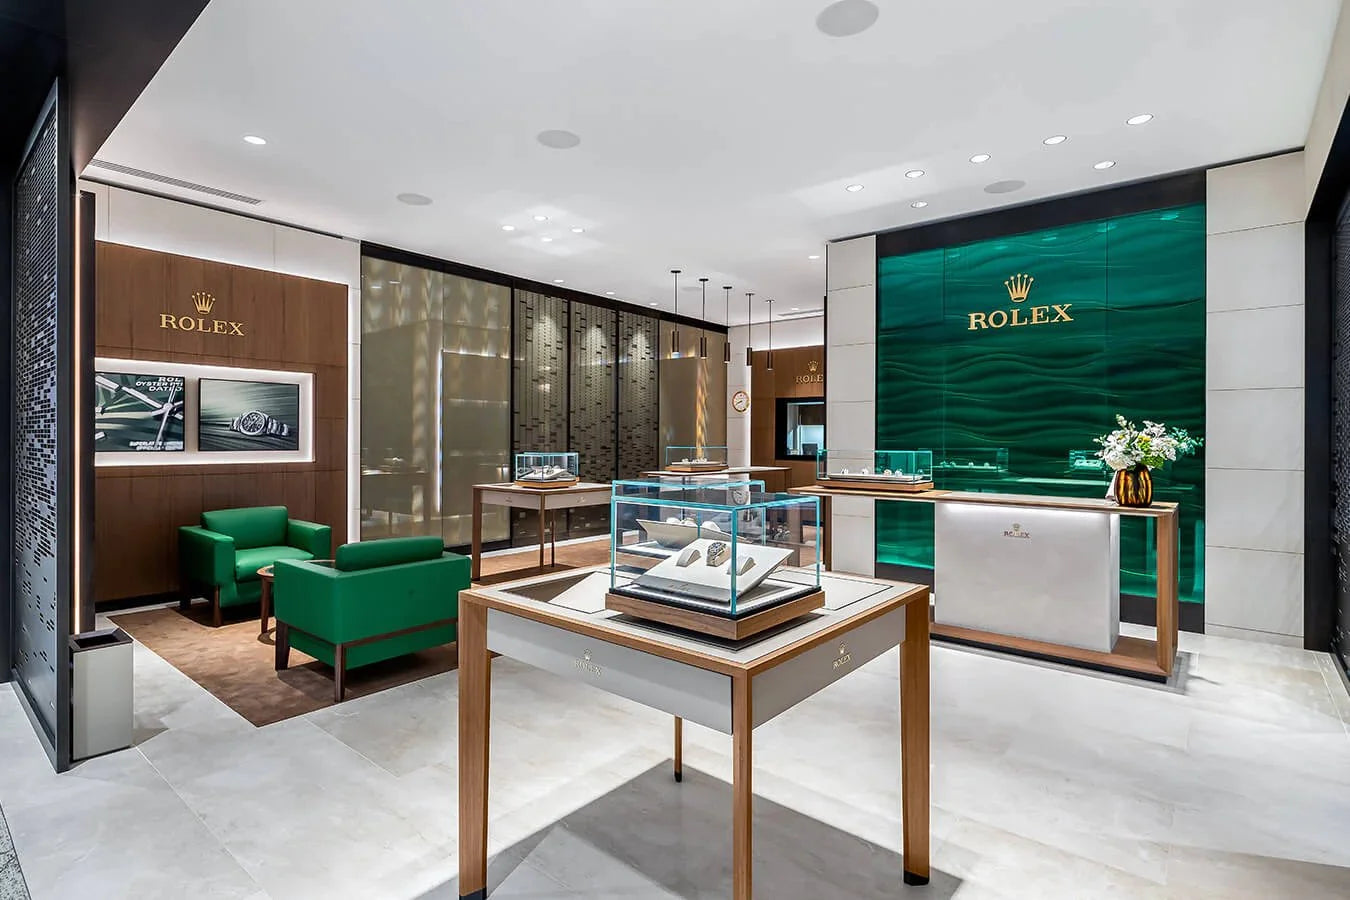 Rolex watches at SCHIFFMAN'S Jewelers in Greensboro and Winston-Salem, North Carolina